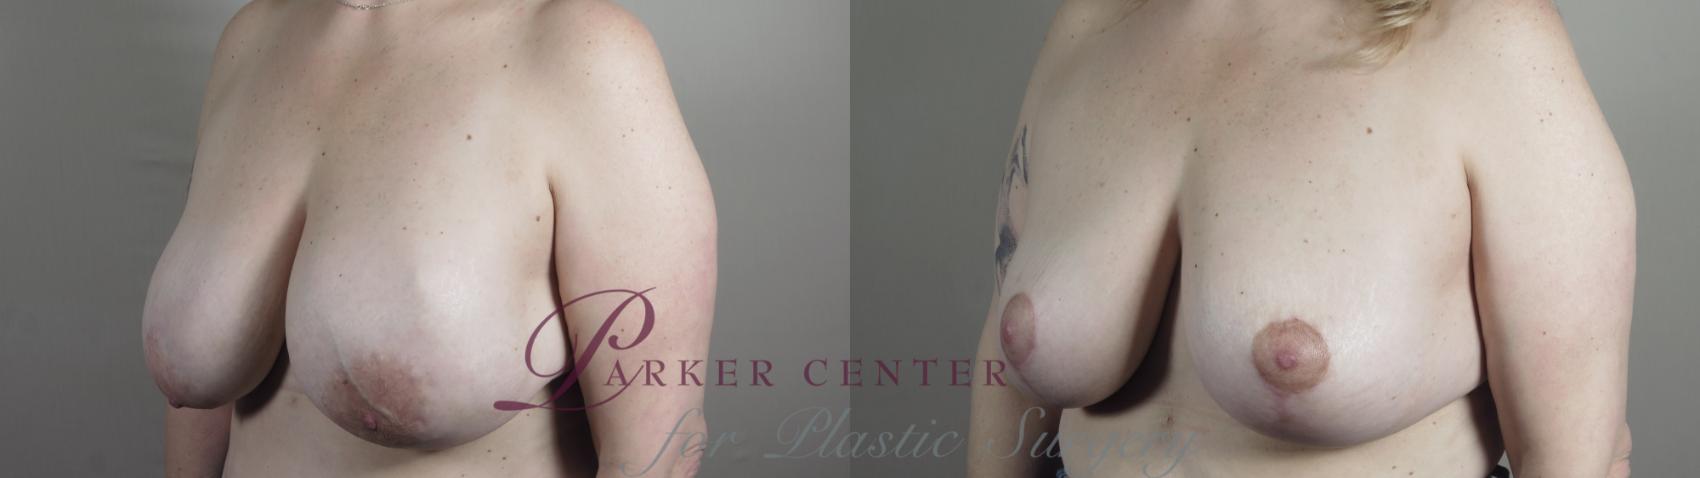 Breast Implant Revision Case 982 Before & After Right Oblique | Paramus, NJ | Parker Center for Plastic Surgery